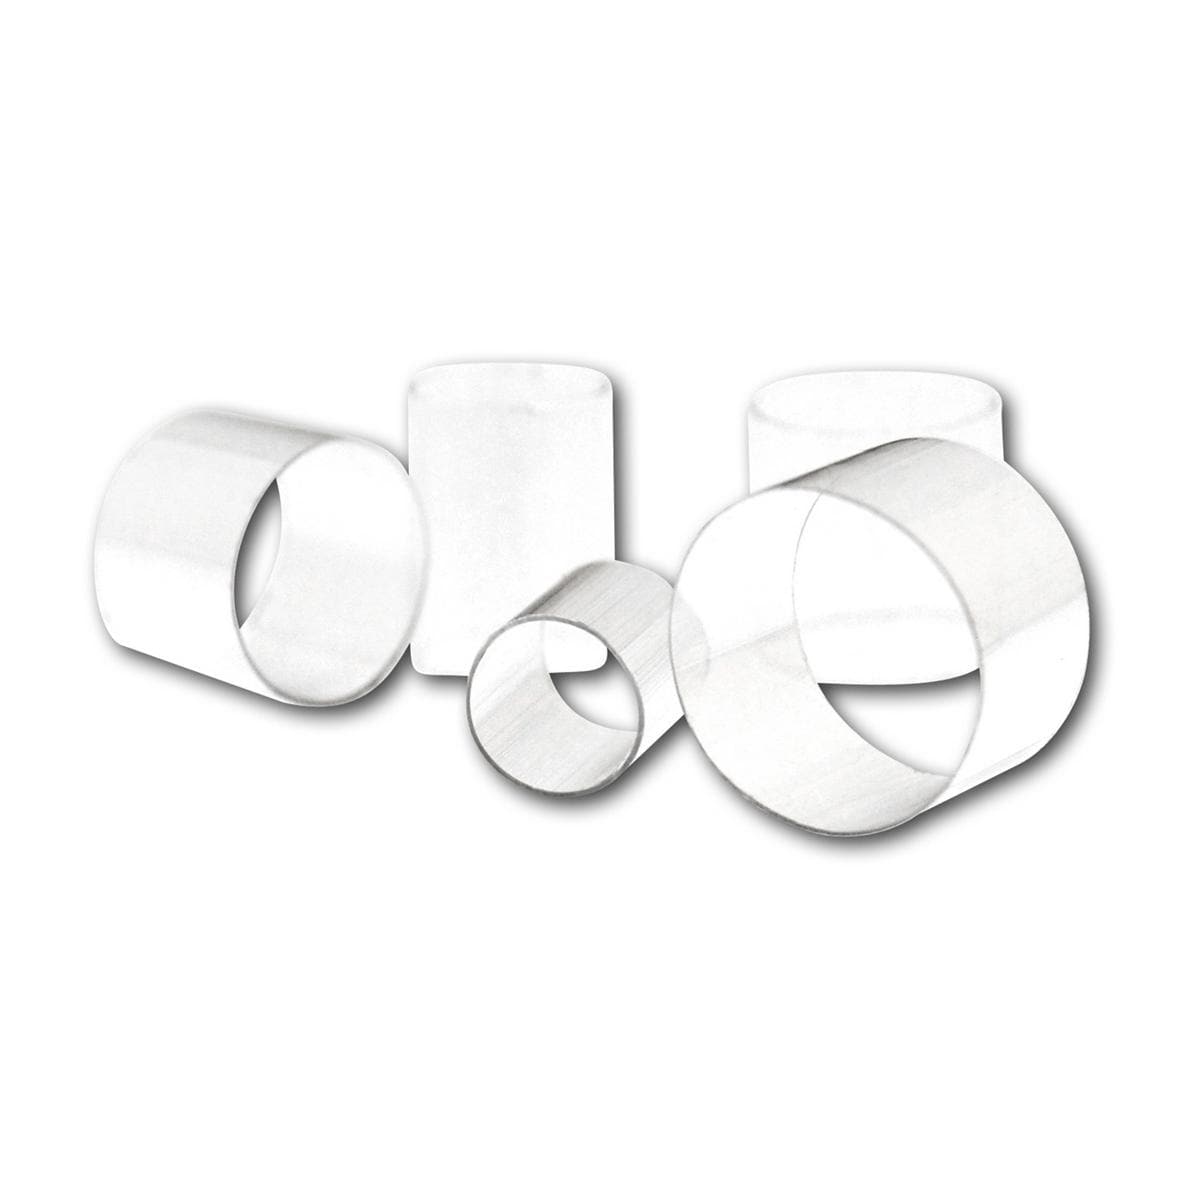 Transparent Ringe - Nachfüllpackung - Nr. 4, Packung 12 Stück